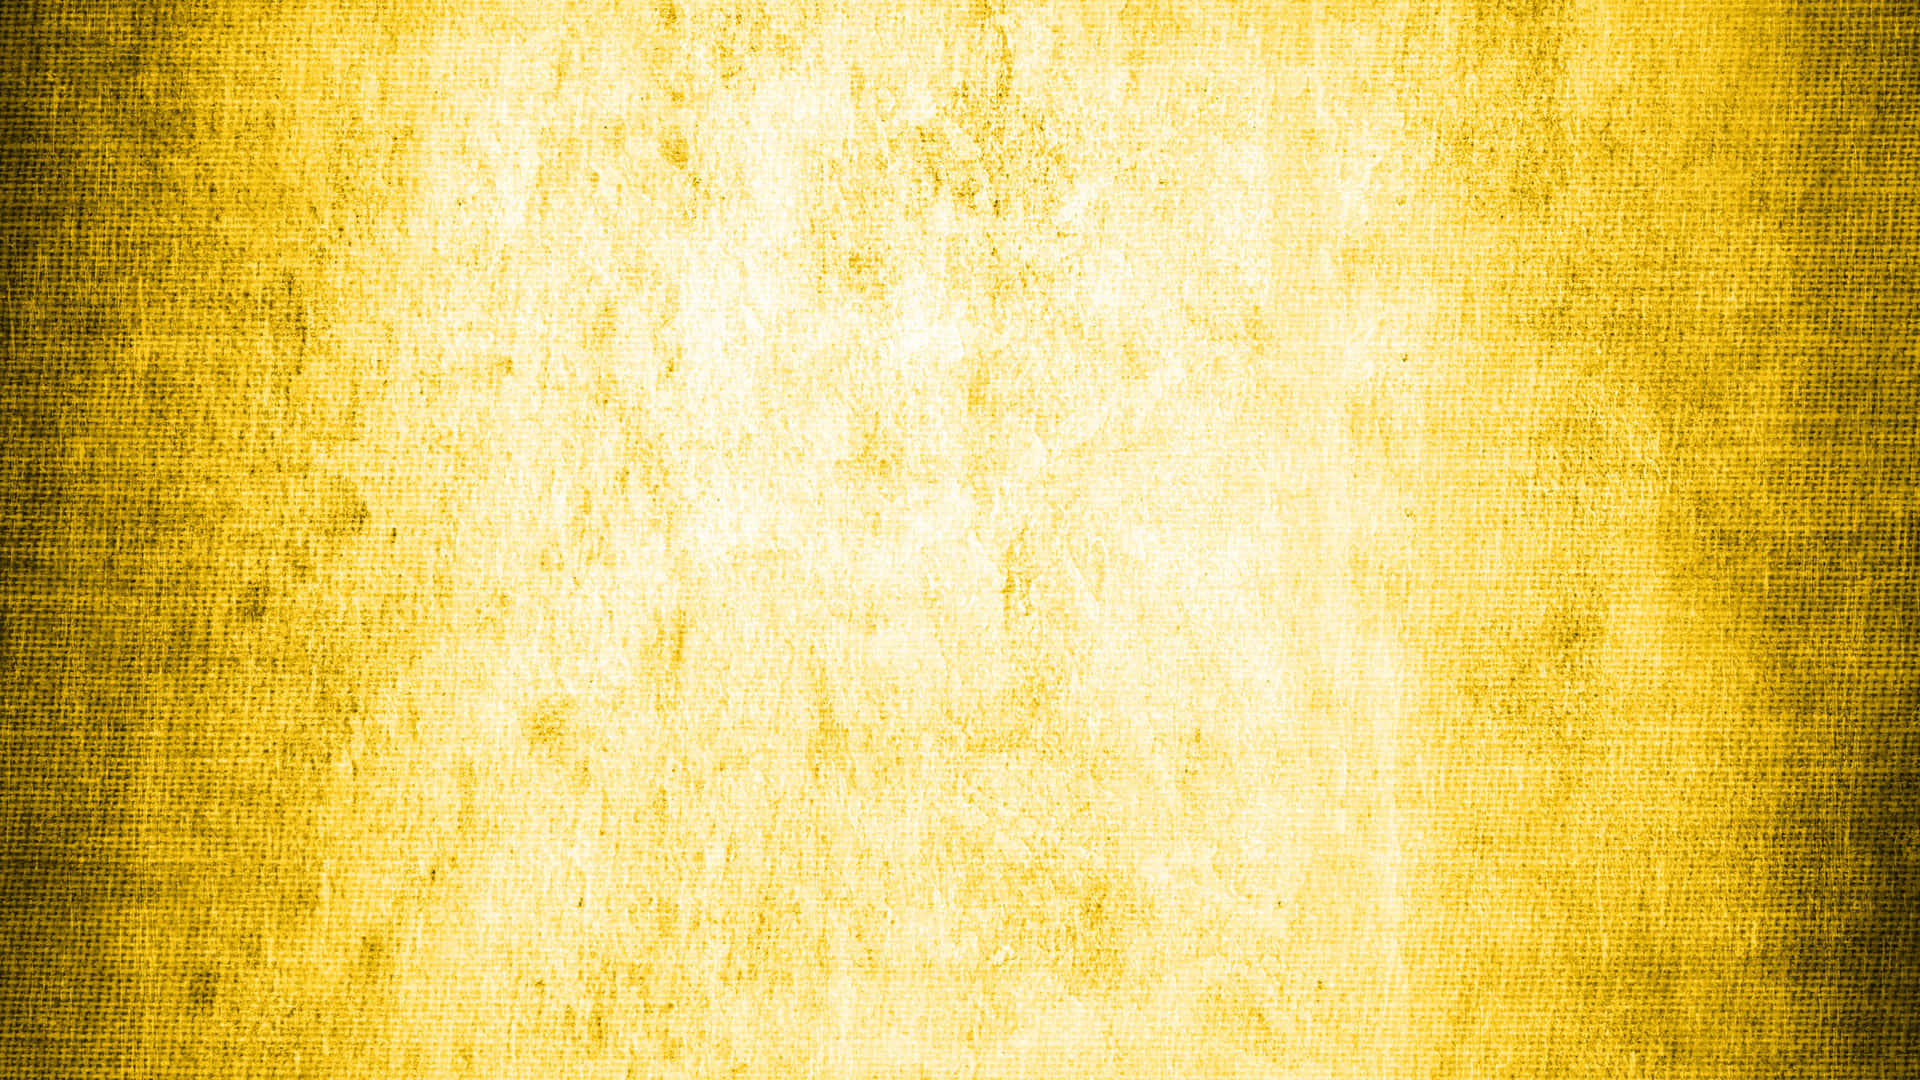 Vibrant Yellow Grunge Background Texture